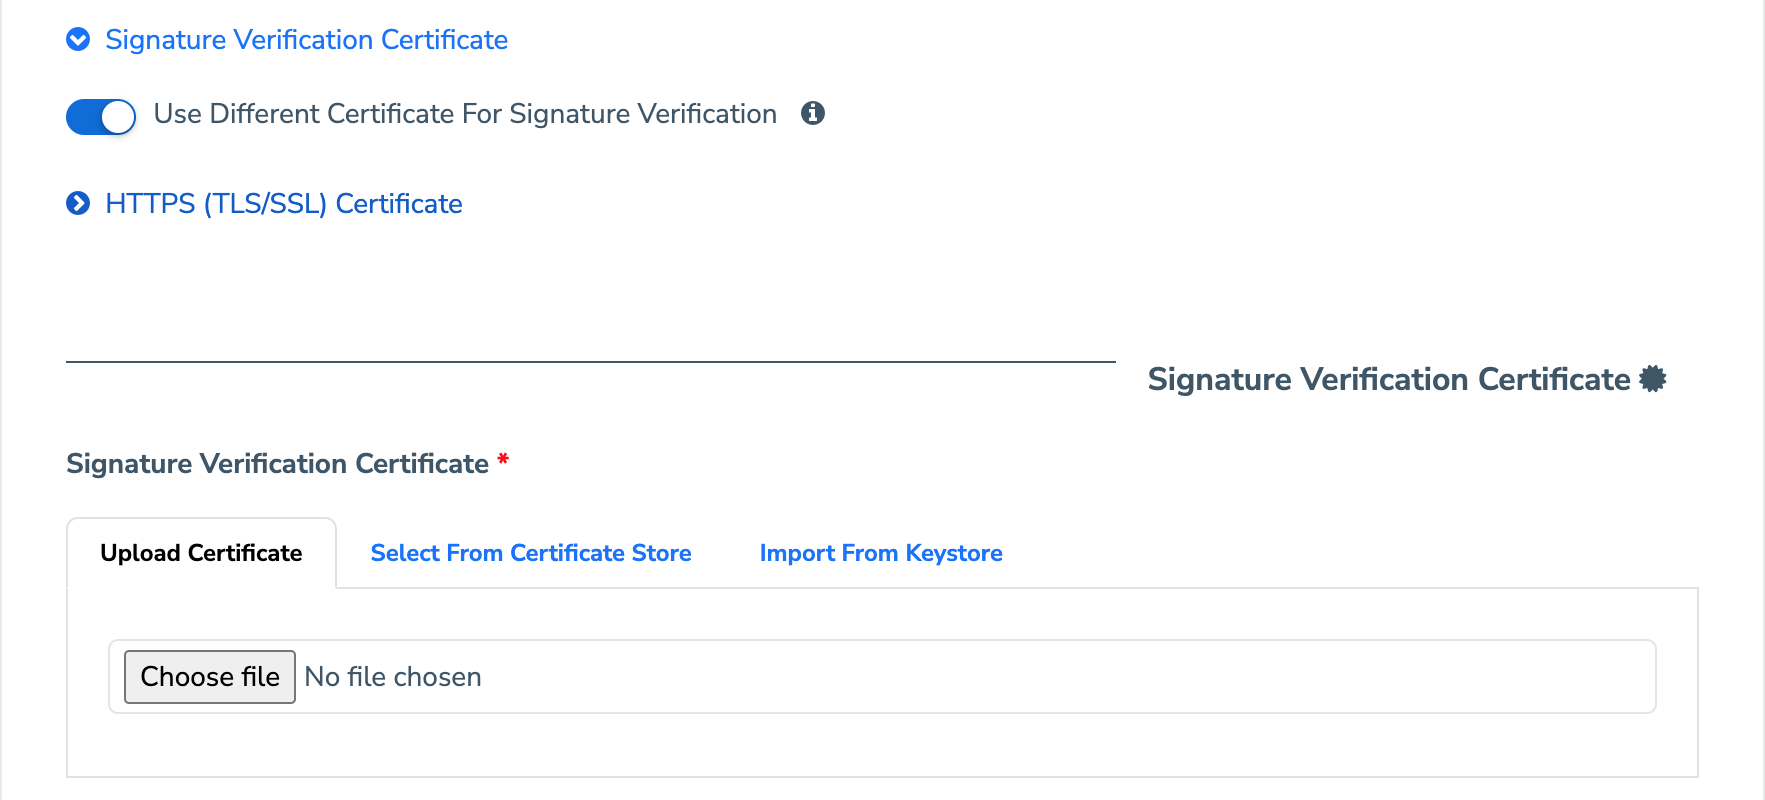 Partner's Signature Verification Certificate